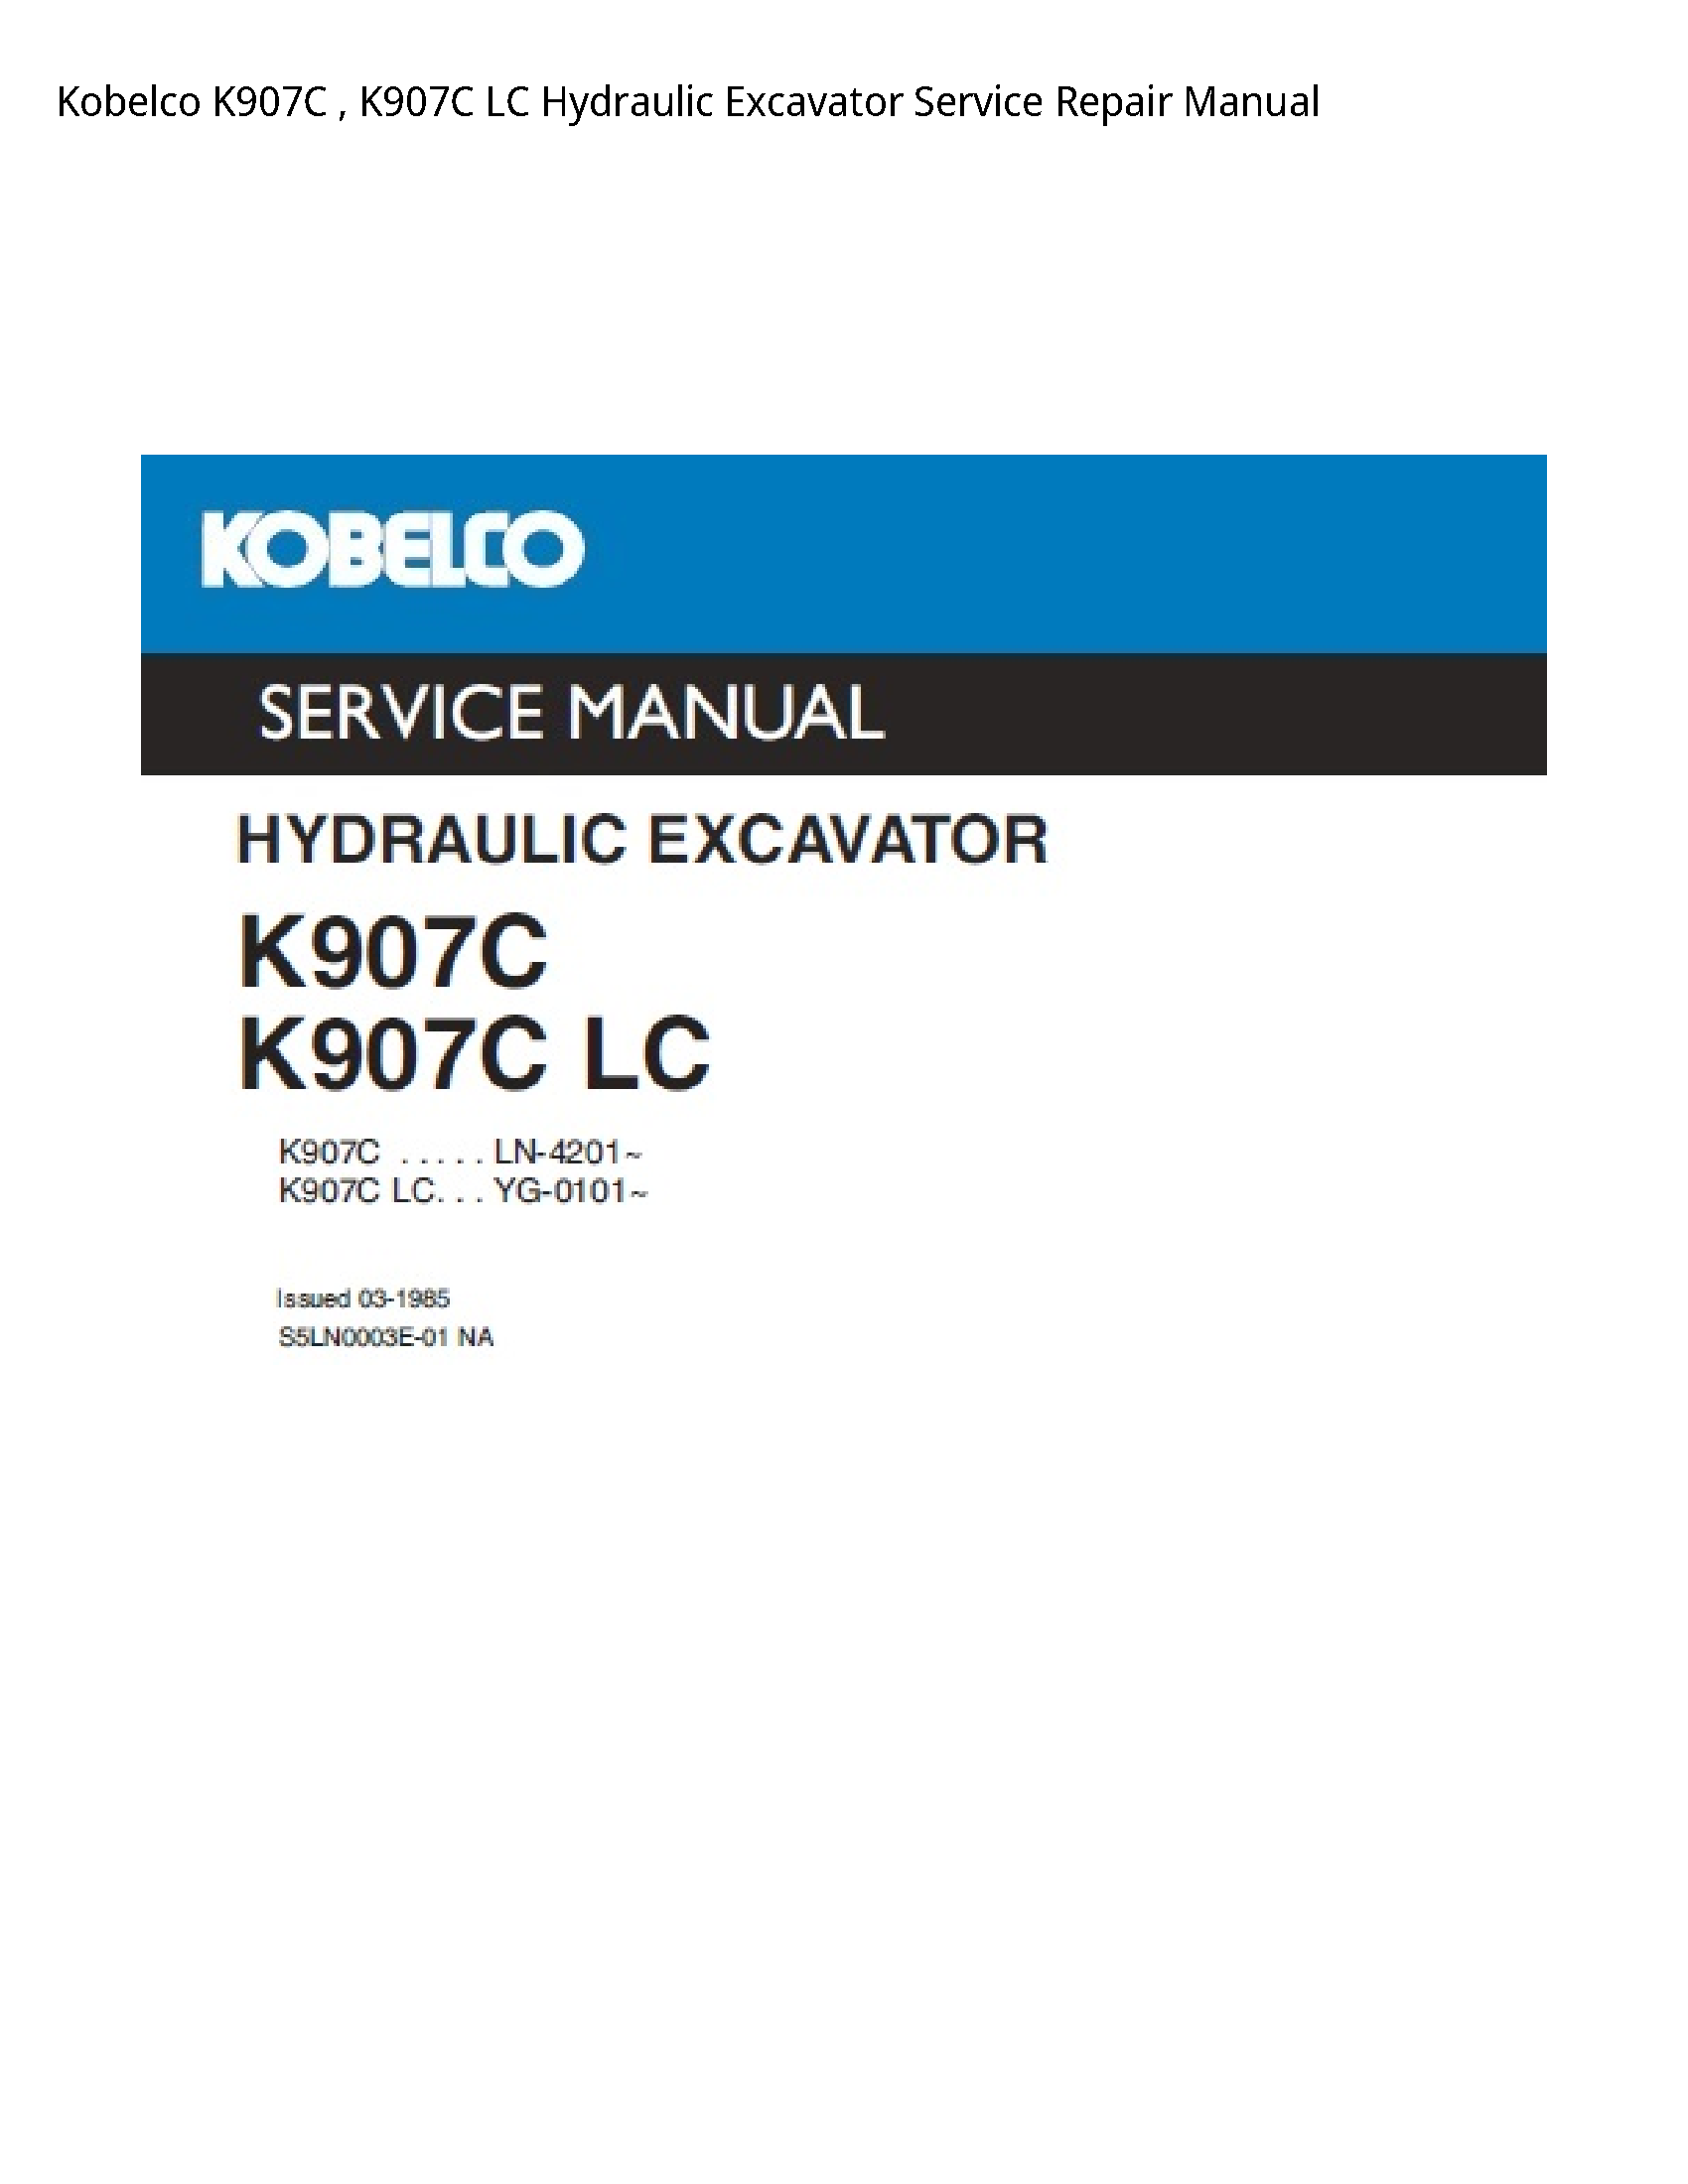 Kobelco K907C LC Hydraulic Excavator manual